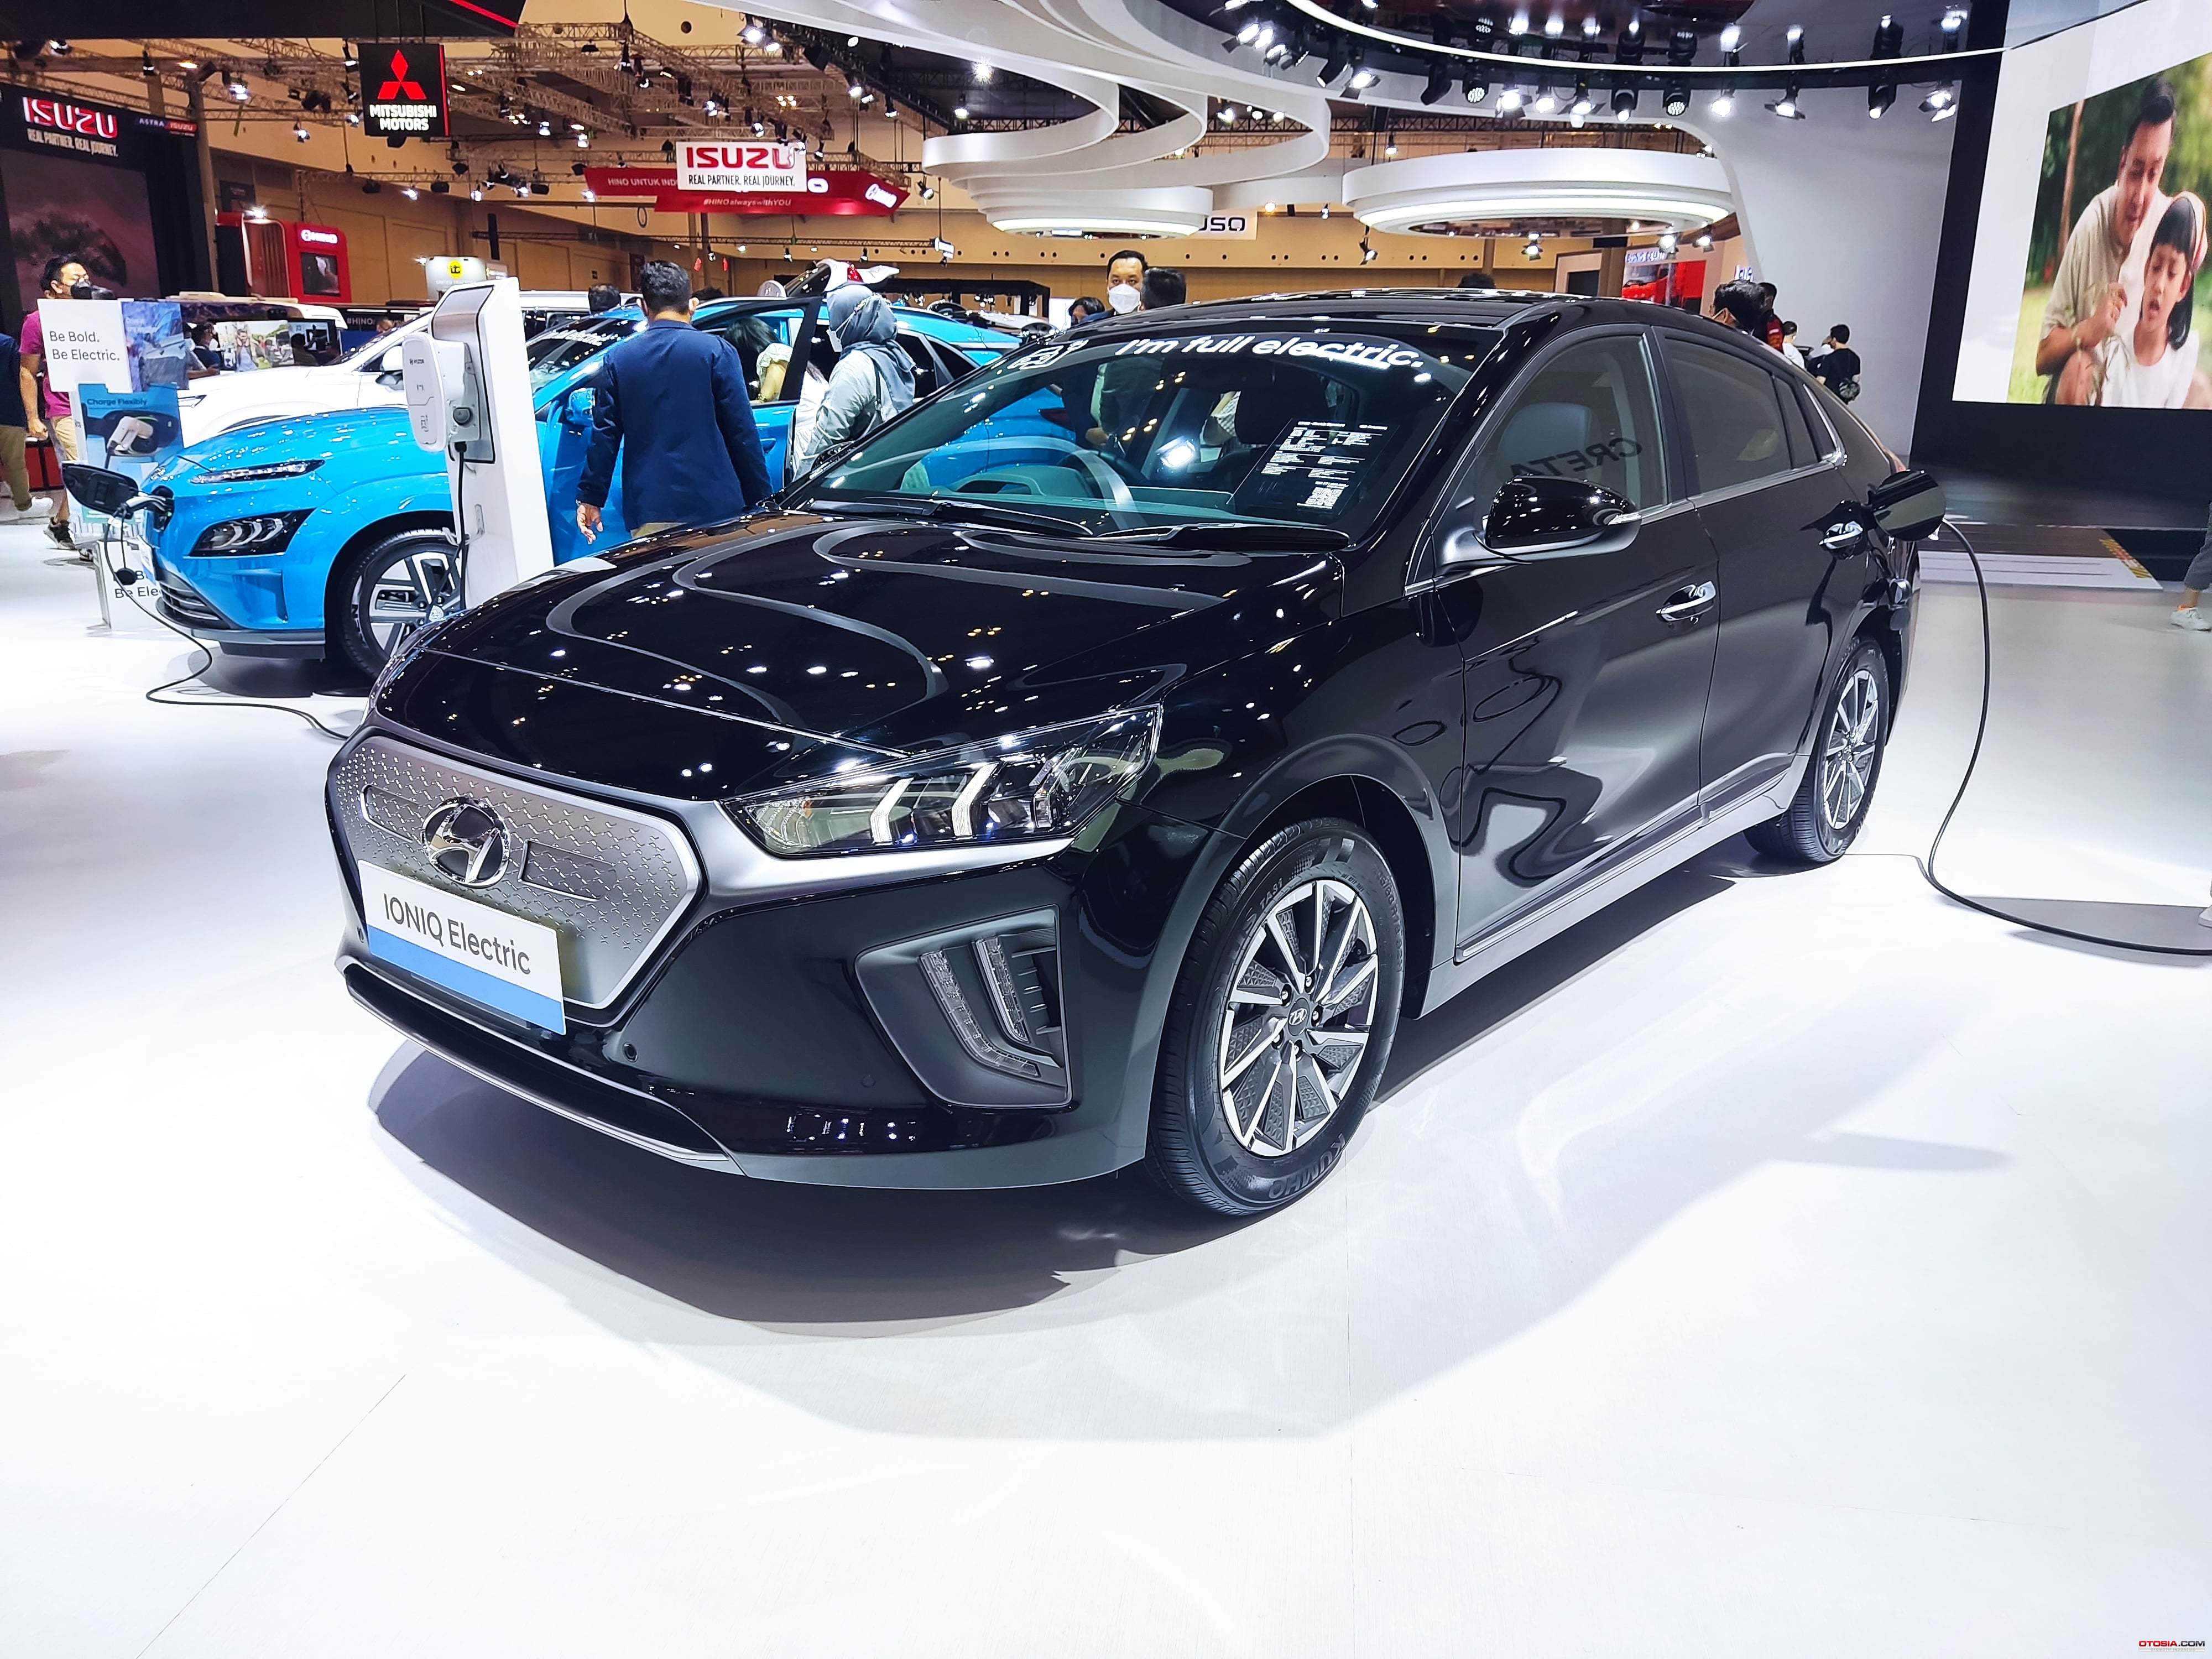 Hyundai Ioniq di GIIAS 2021 (Otosia.com/Arendra Pranayaditya)